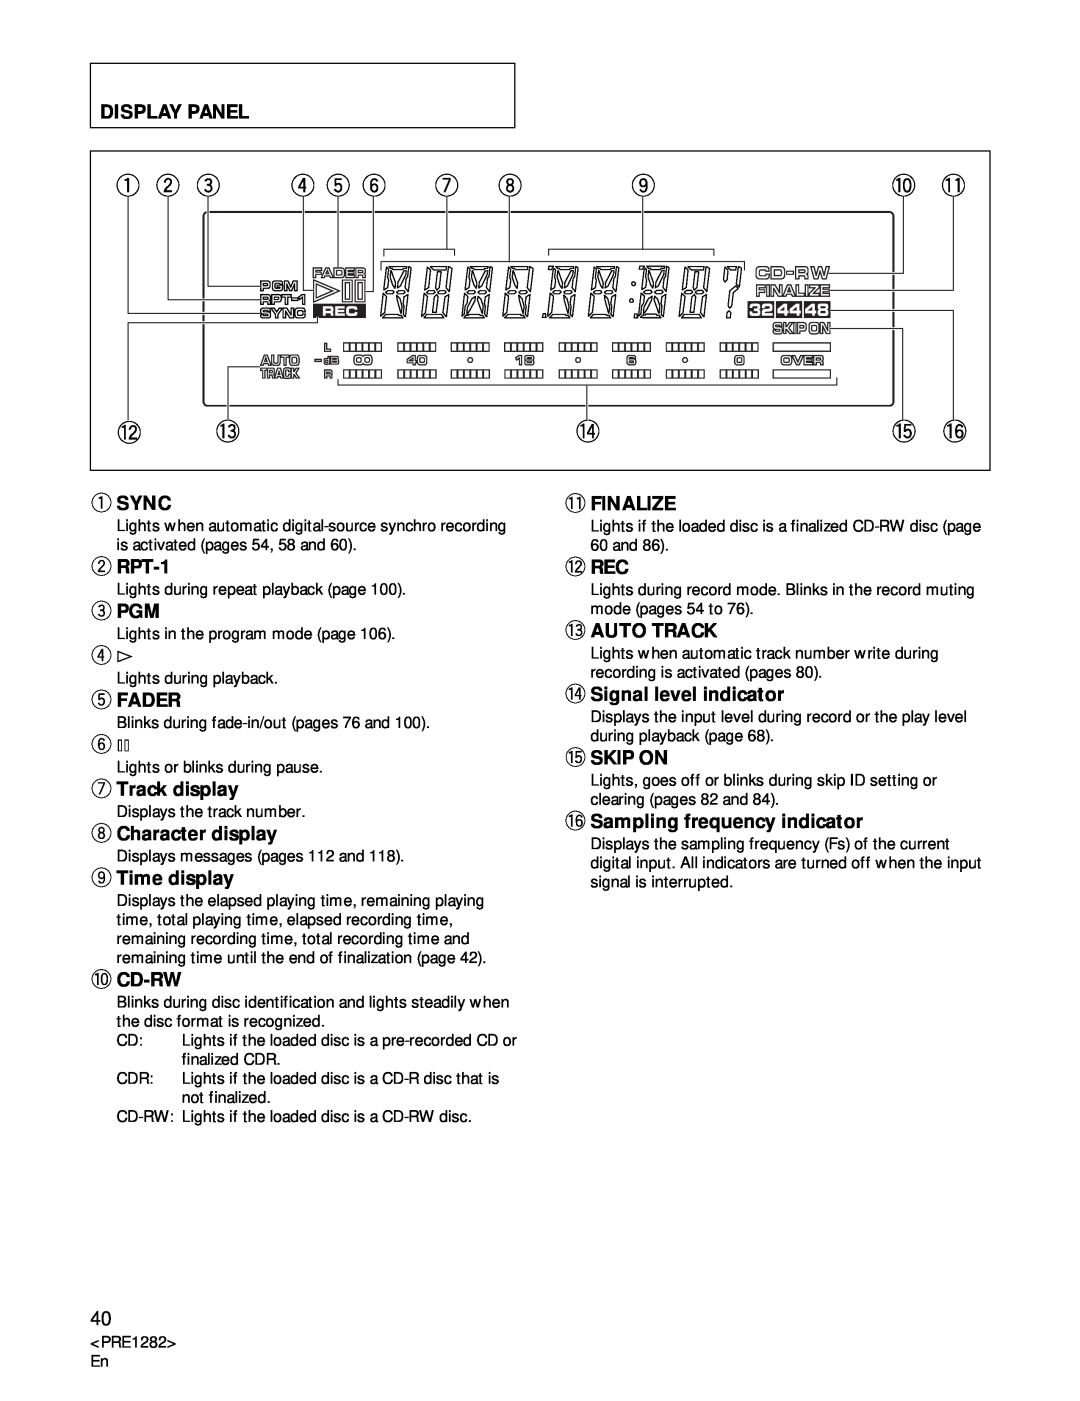 Americana Appliances CDR-850 manual Display Panel 